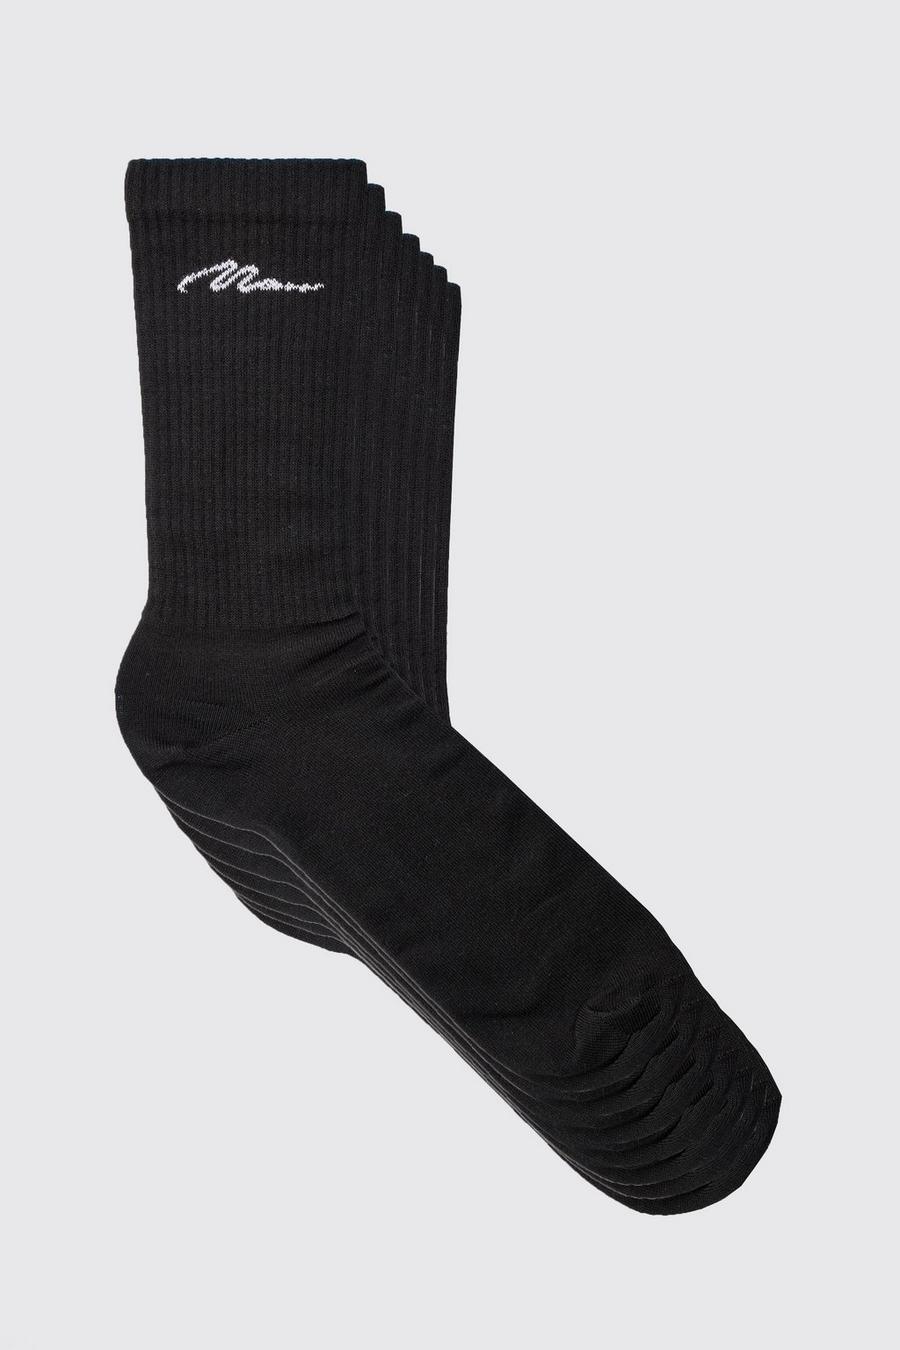 Black 7 Pack Man Signature Sport Socks